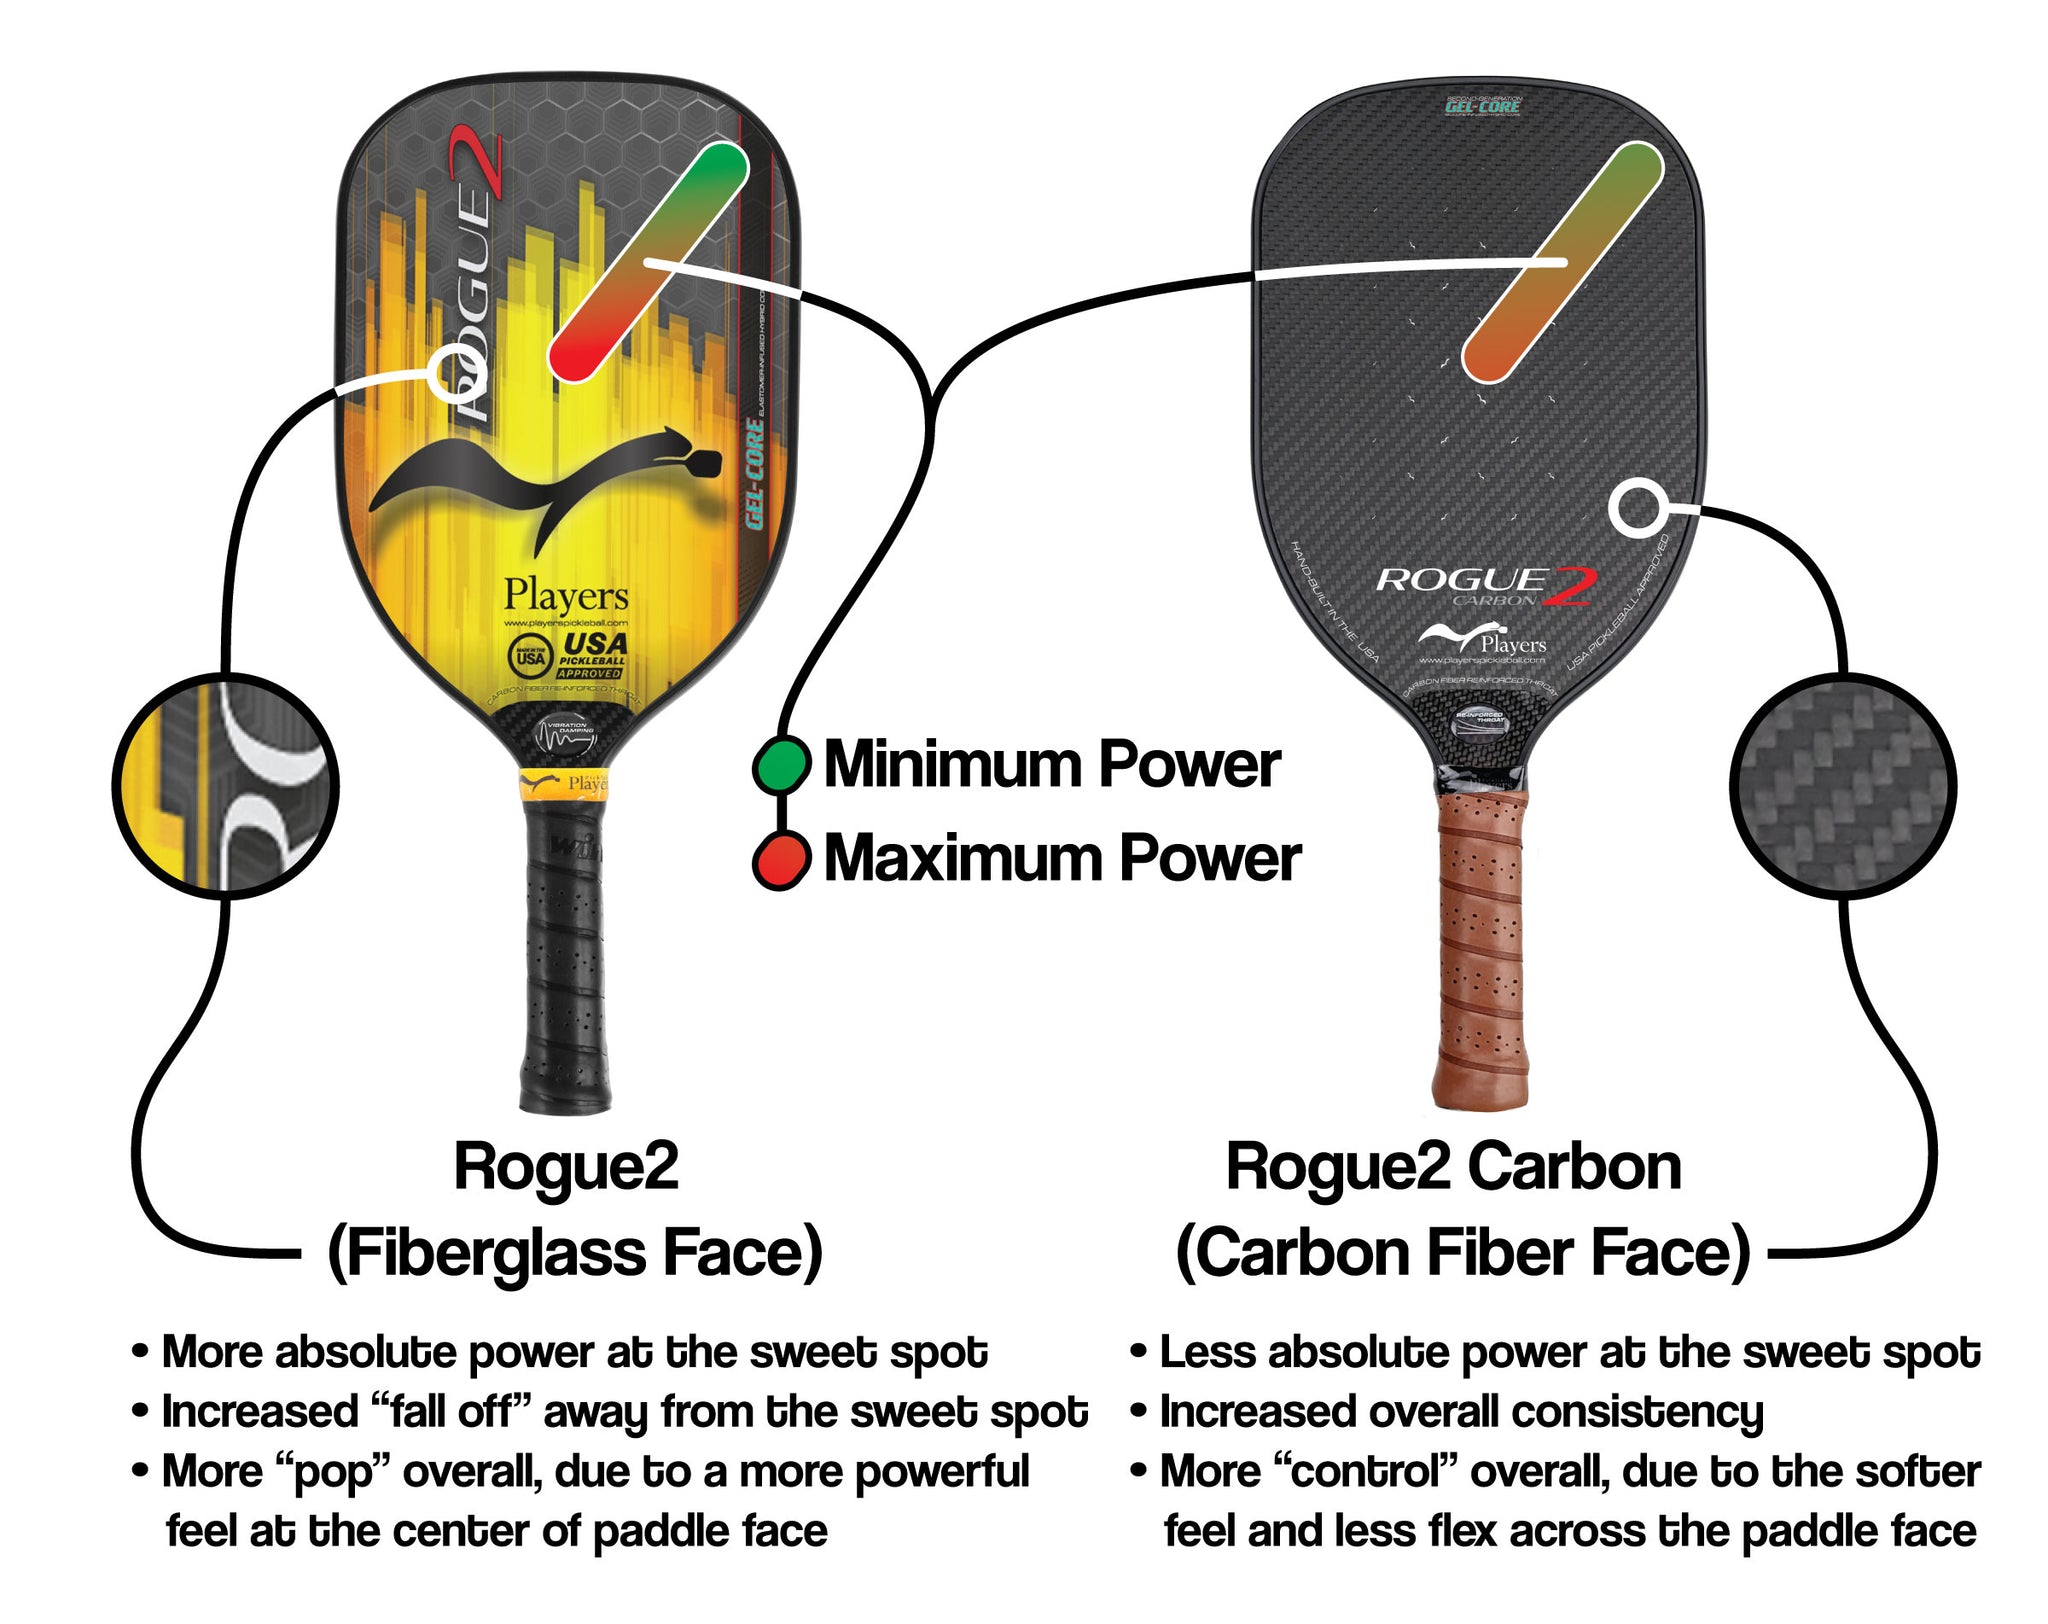 Carbon Fiber versus Fiberglass face comparison